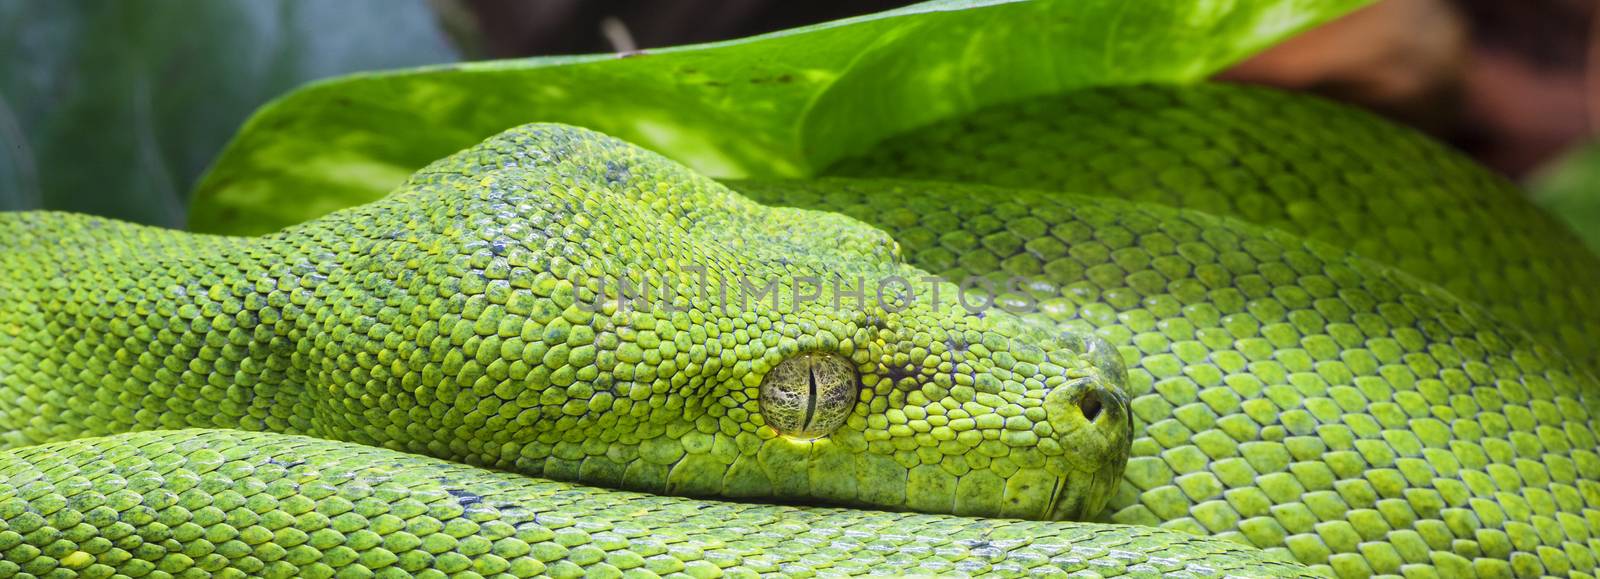 Panoramic view of green python